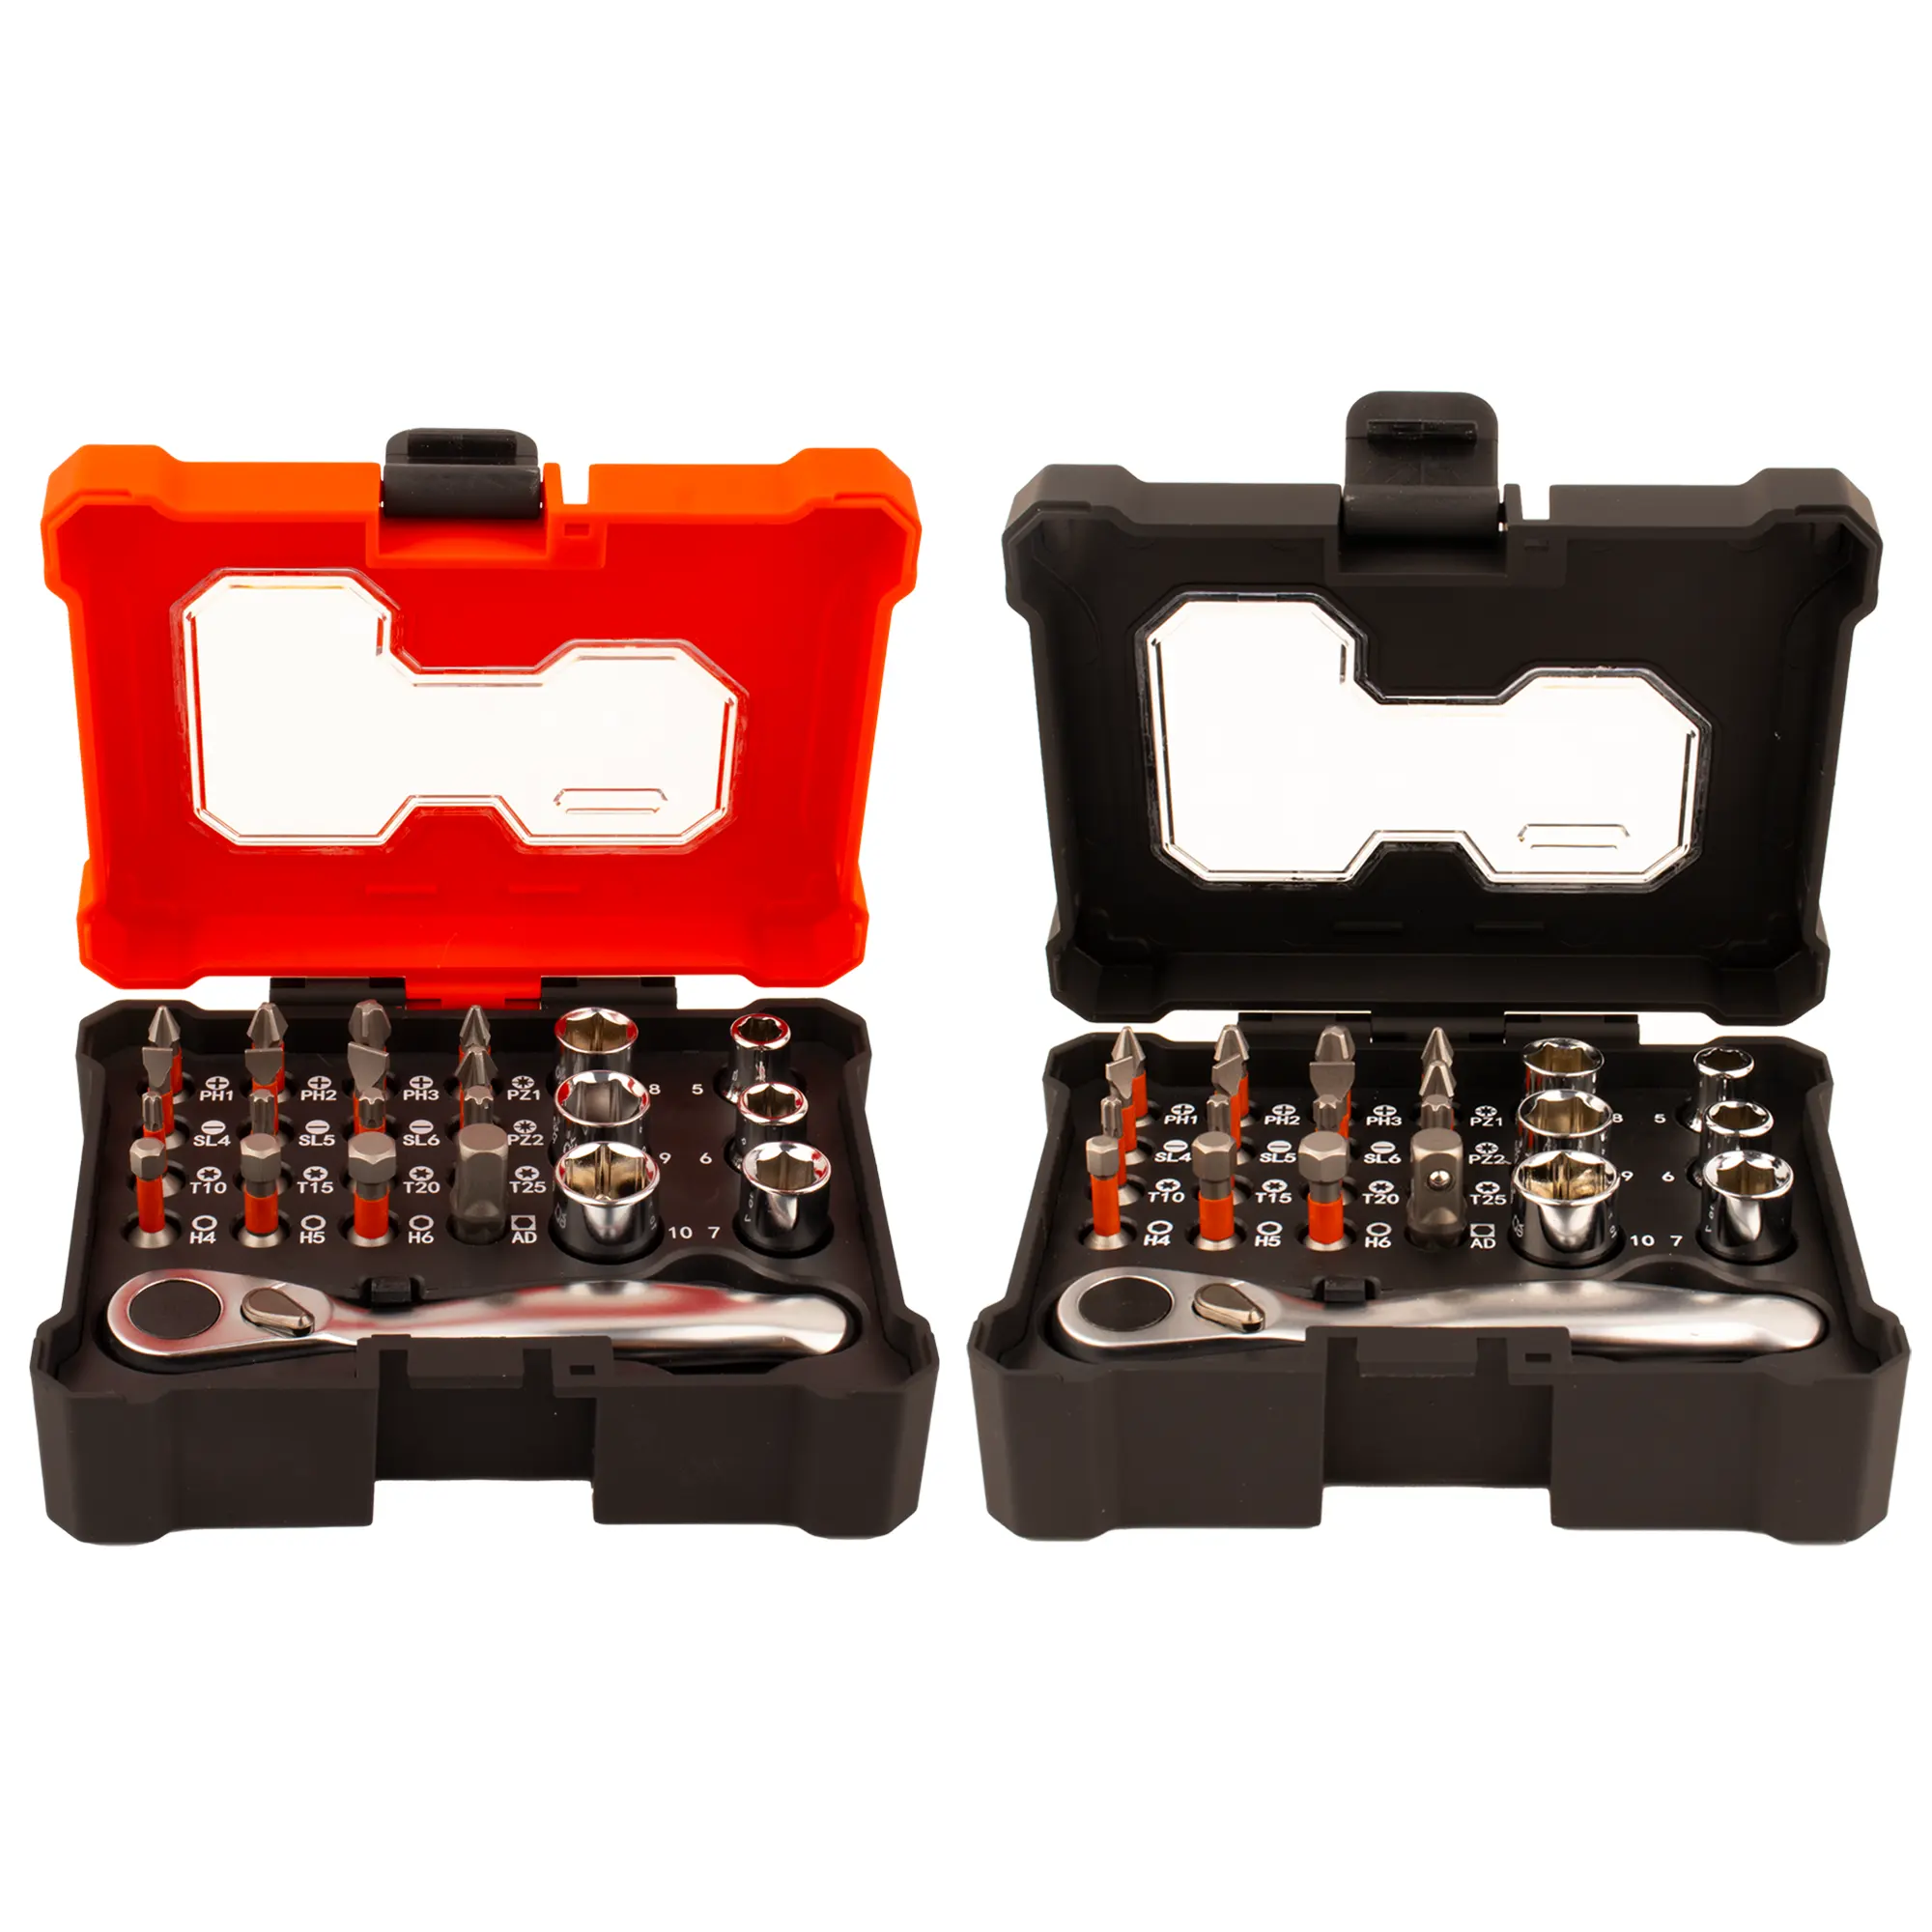 23 in 1 screwdriver bit set Multifunctional compact tool set mini ratchet wrench tools screw driver bit set